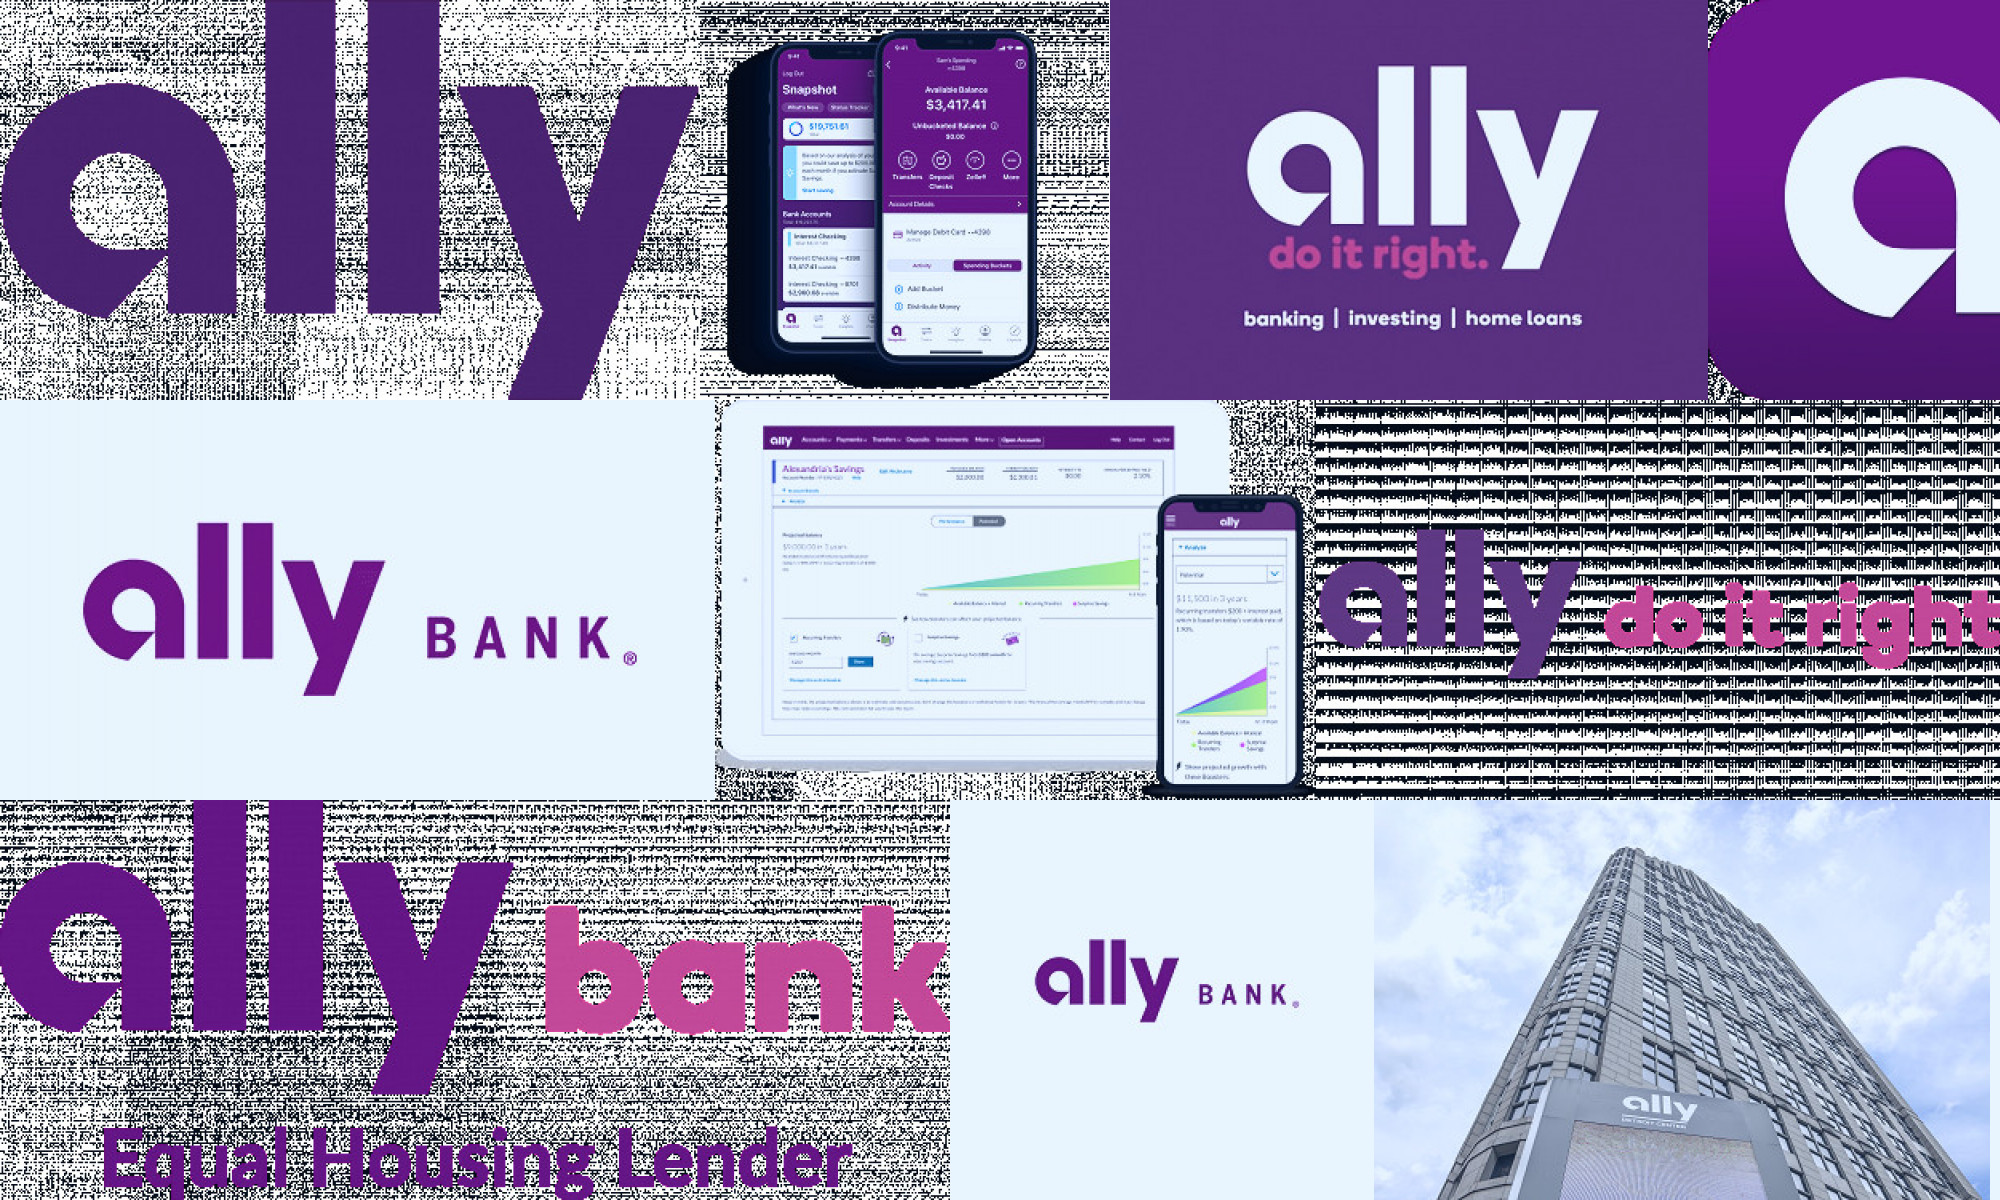 ally bank